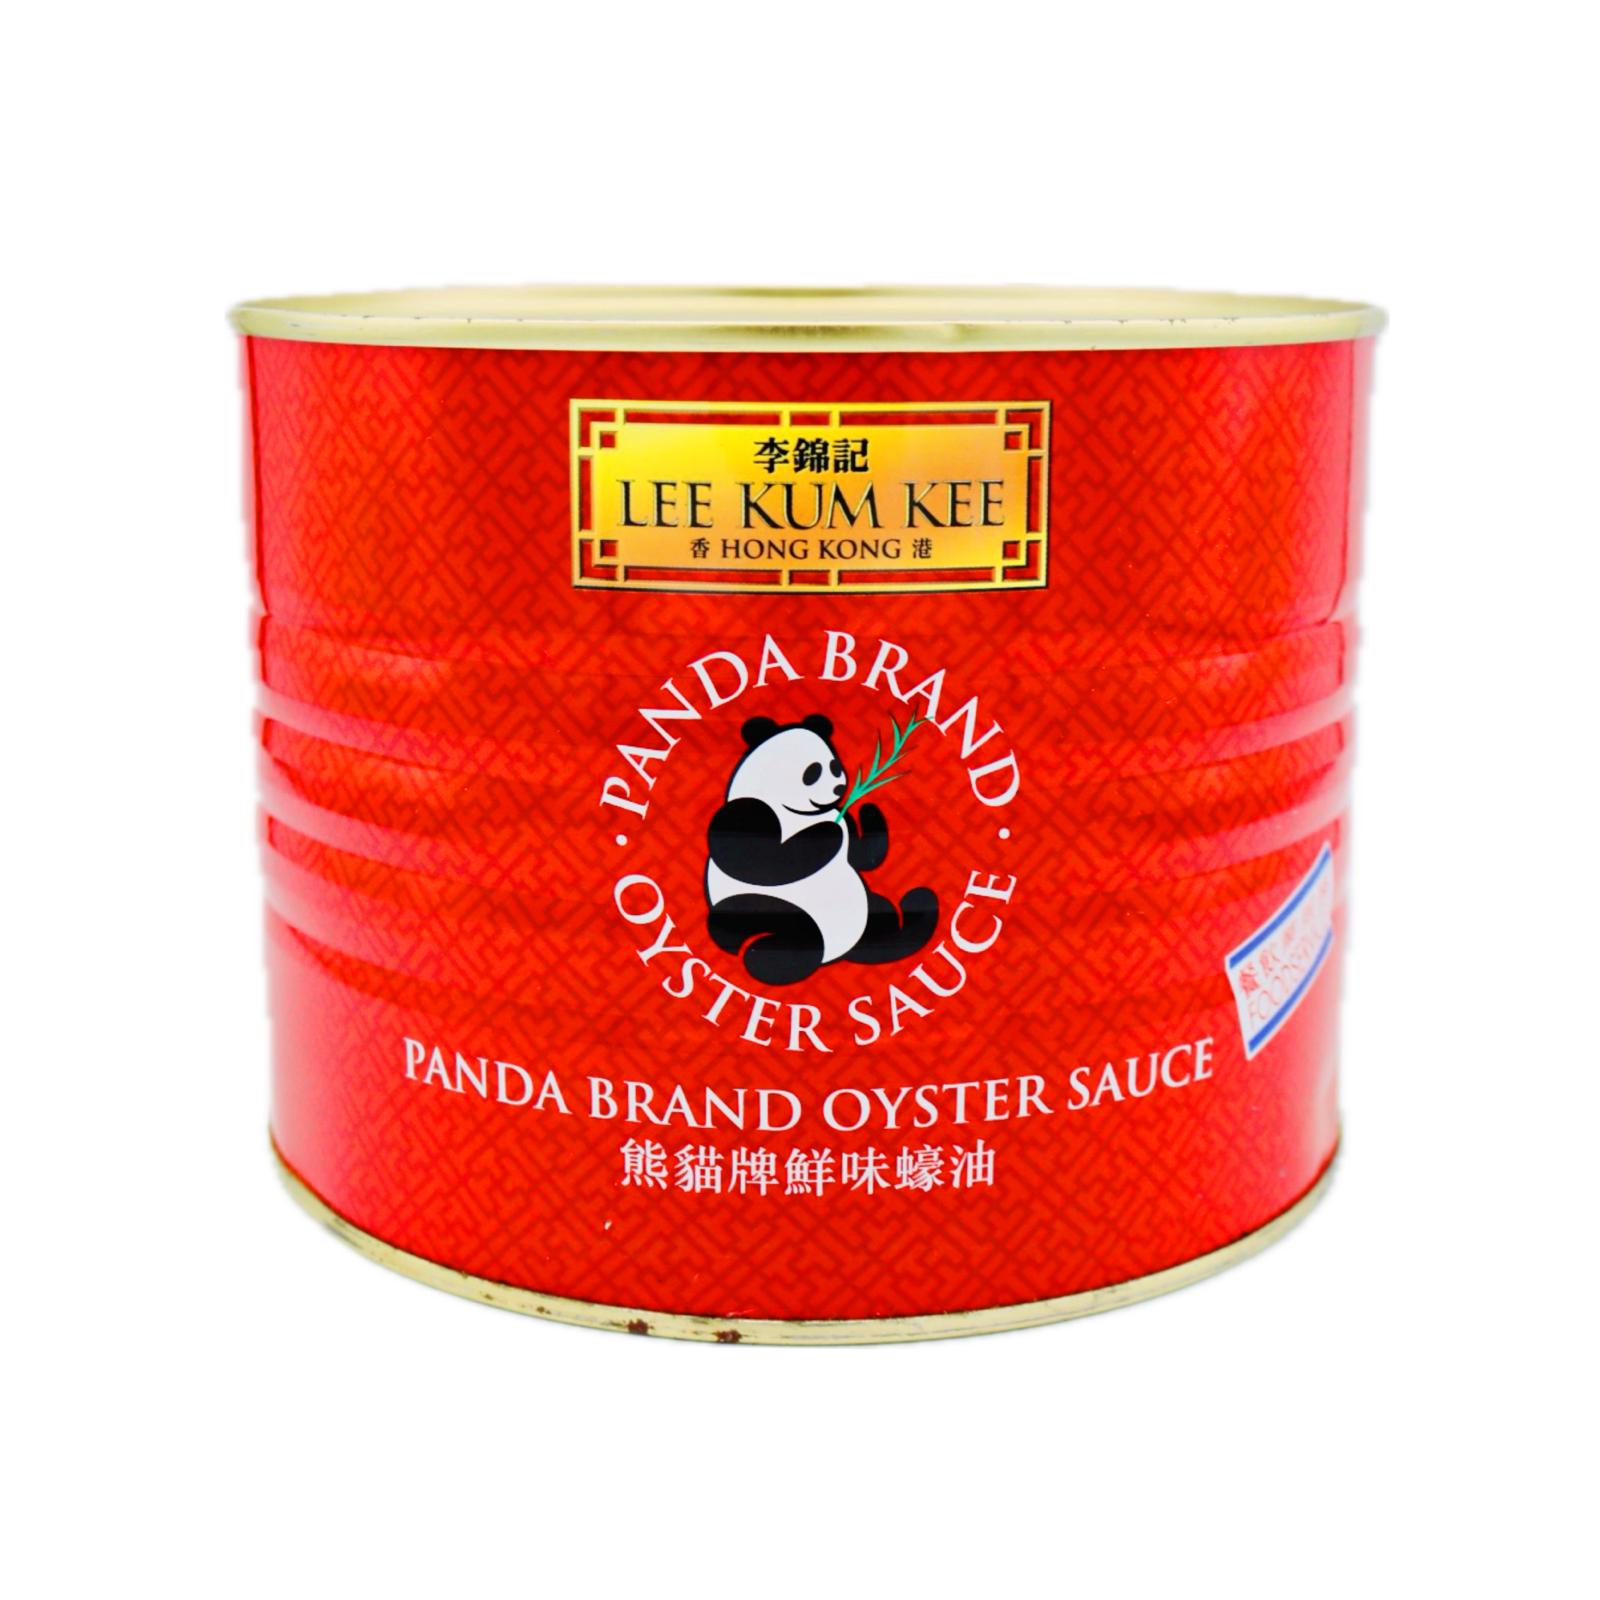 Lee Kum Kee Panda Brand Oyster Sauce 2.7kg